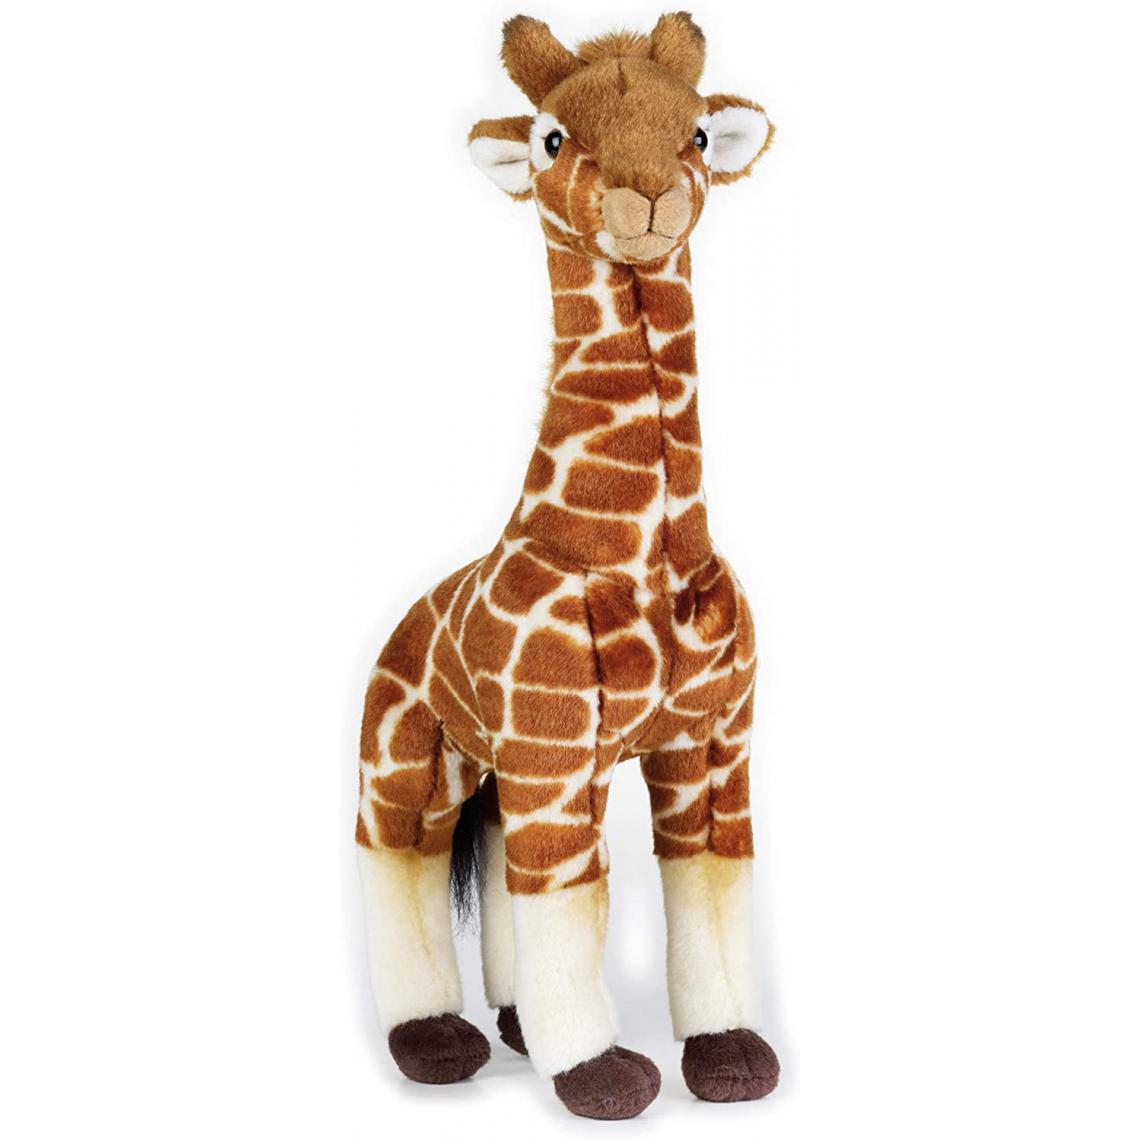 National Geographic - peluche Giraffe de 35 cm brun - Animaux